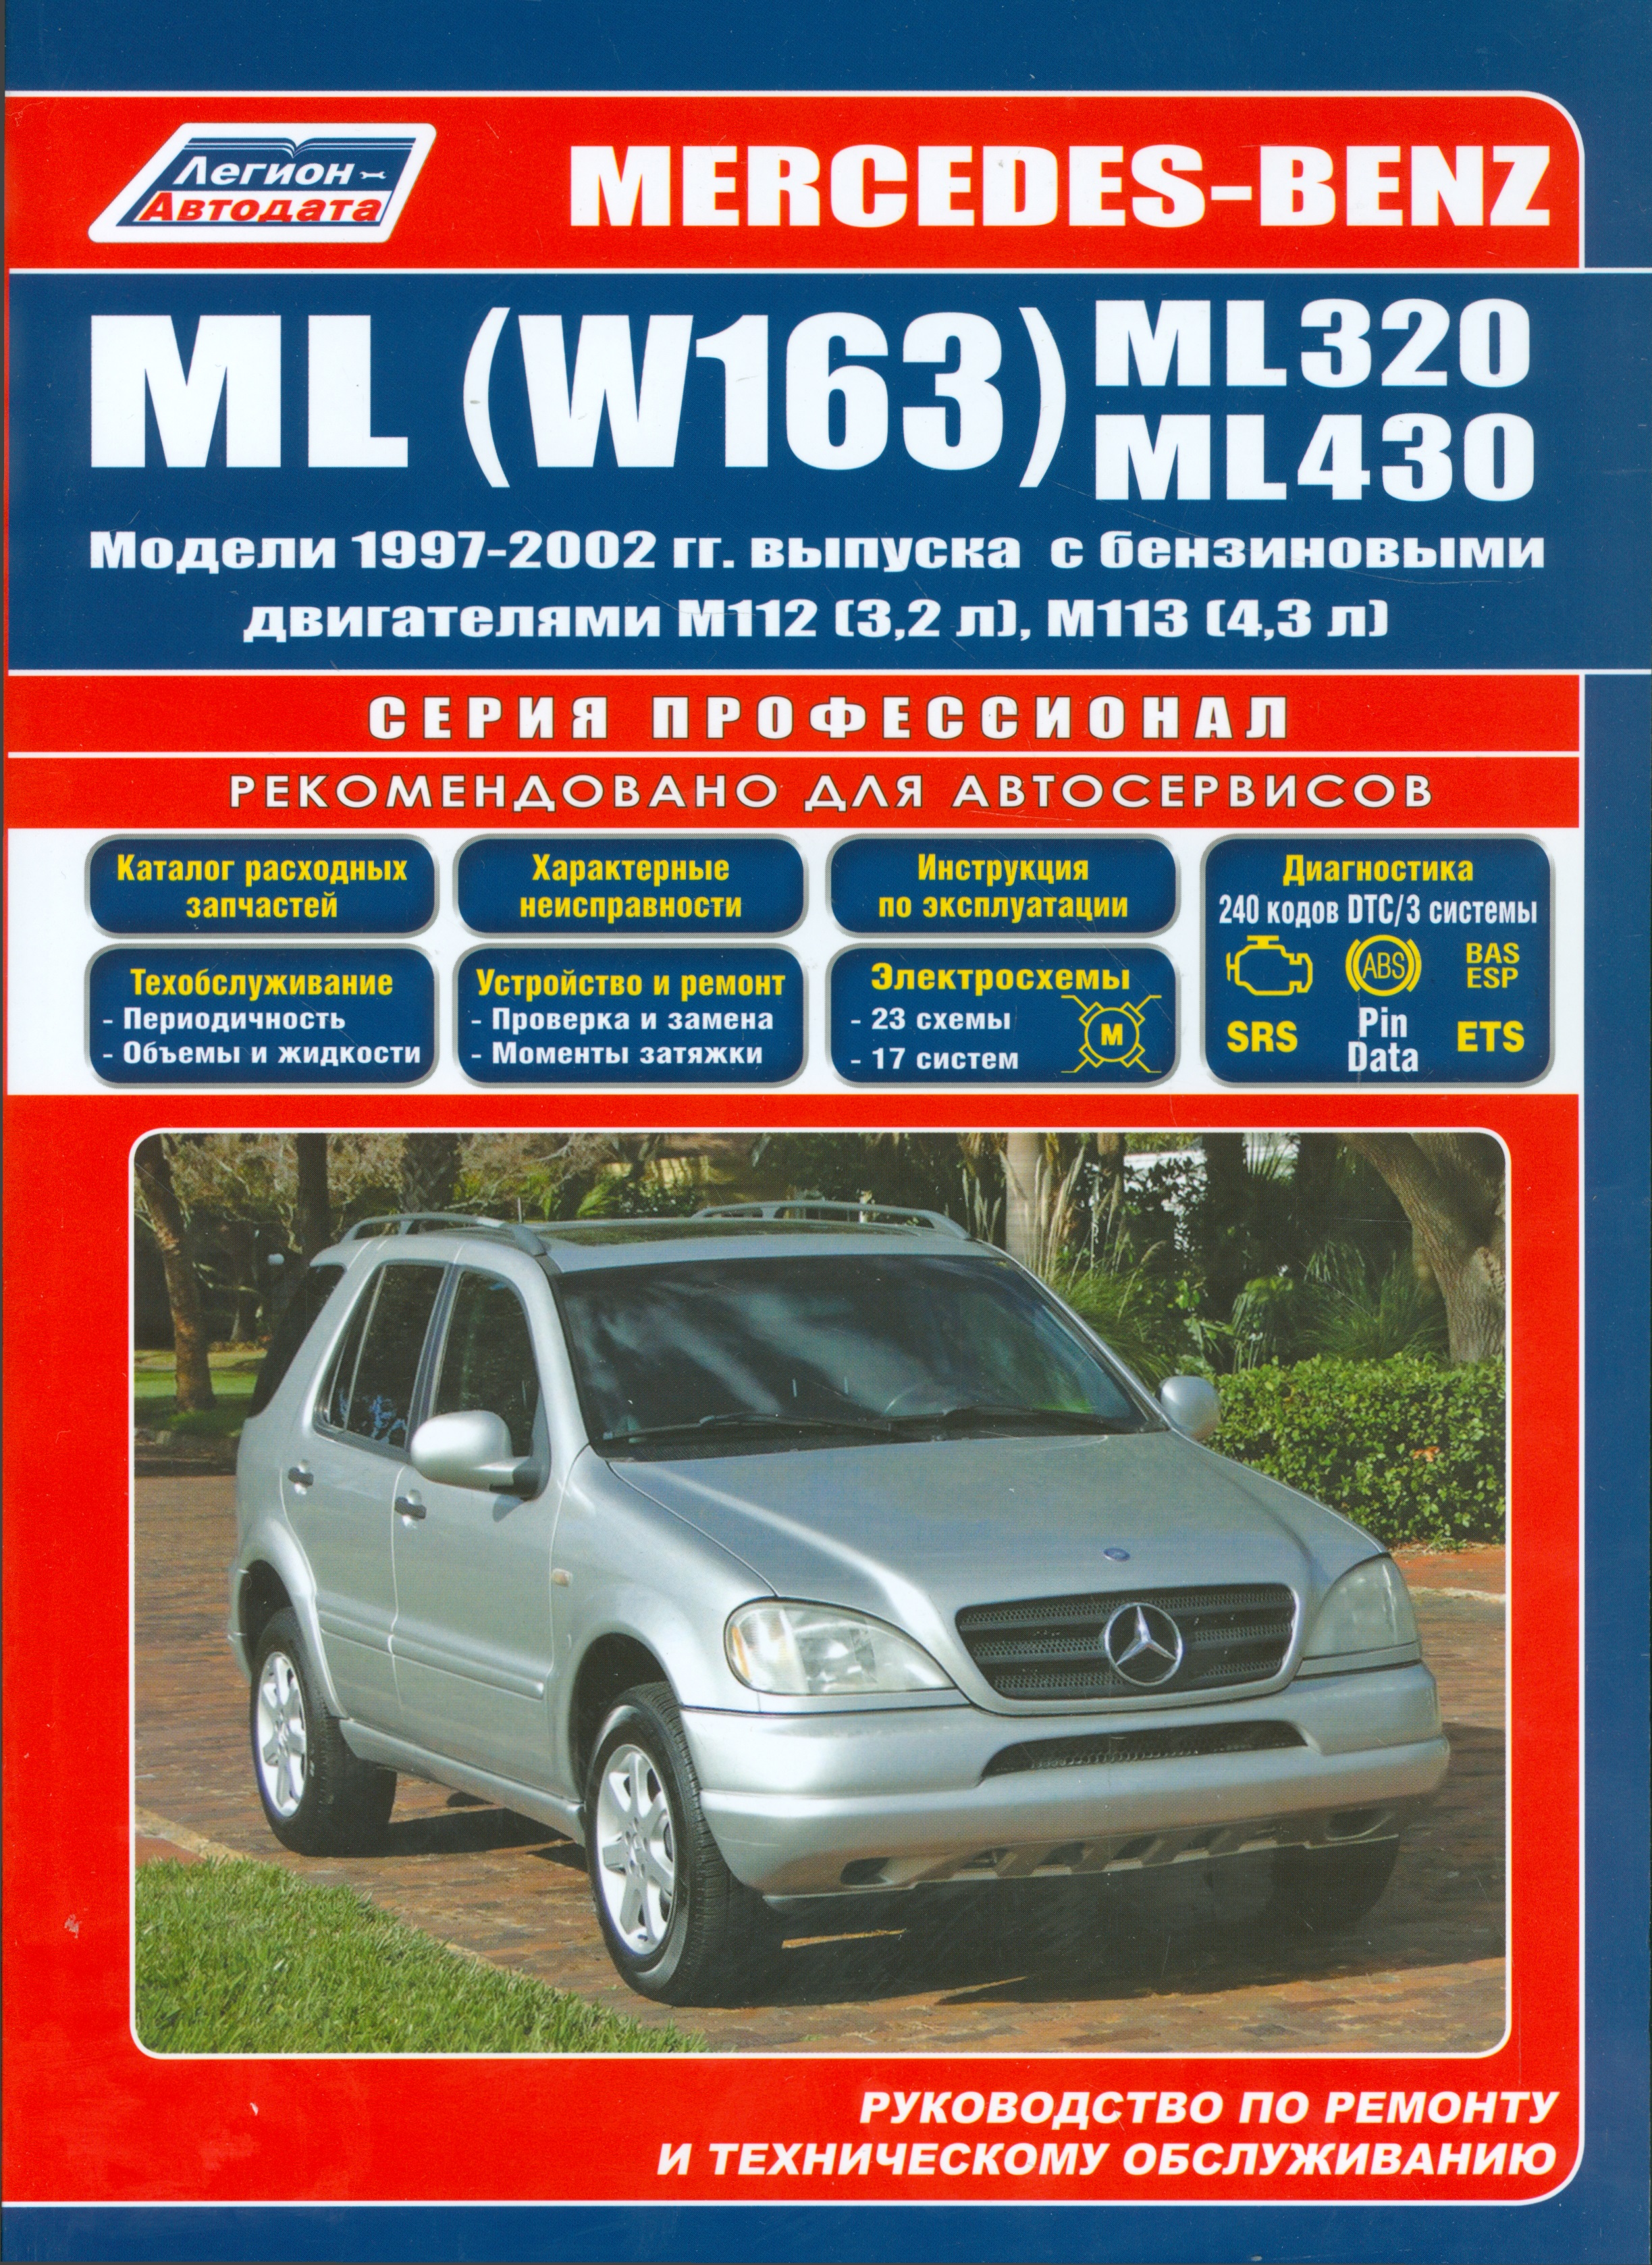 Mercedes-Benz ML (W163) ML320 ML430 Мод. 1997-2002 гг. вып. С бенз. (мПрофессионал) suzuki grand vitara в фотогр мод с 2008 г вып с бенз двигателями j24b… мпрофессионал